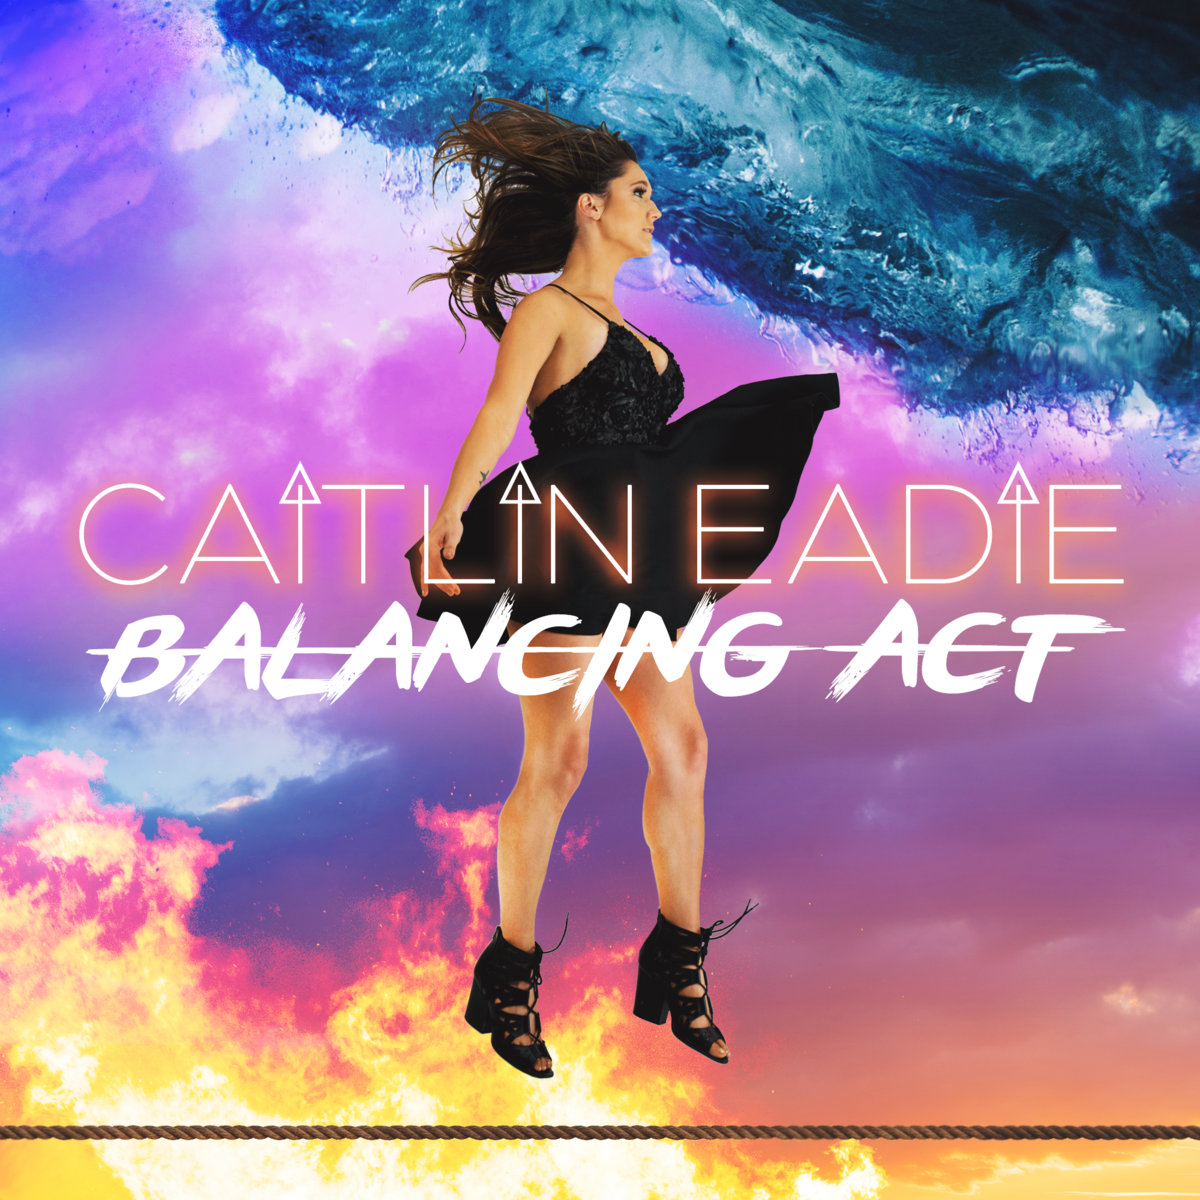 Balancing Act - Caitlin Eadie